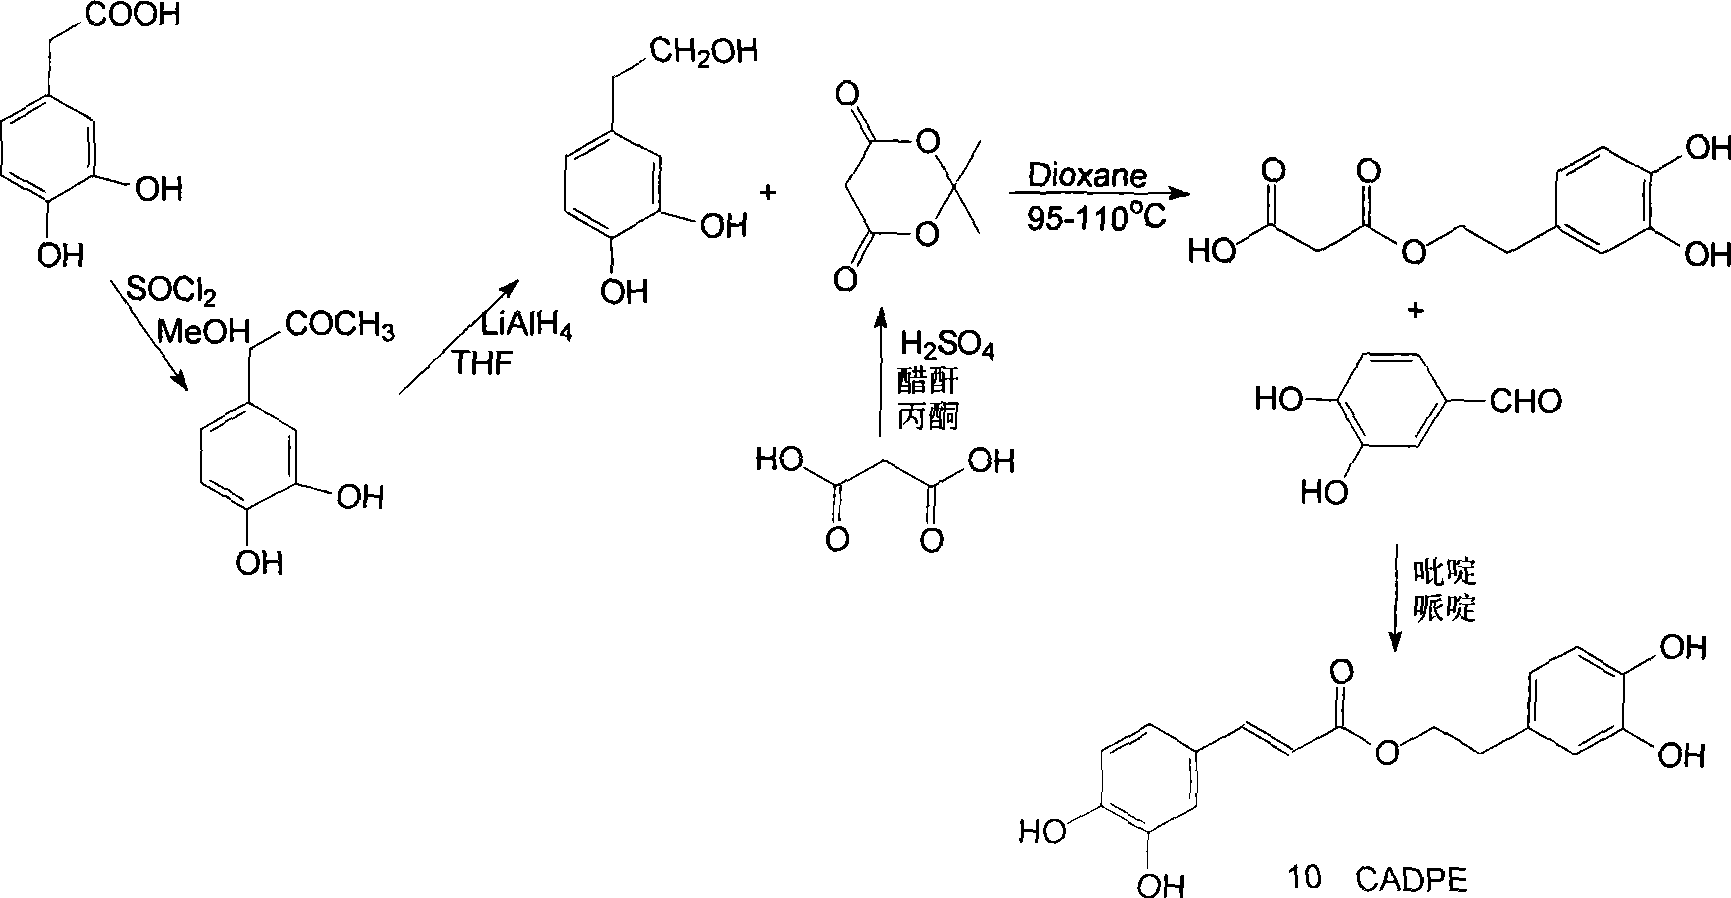 Preparation of 3-(3,4-dihydroxyphenyl)-acrylic acid 2-(3,4-dihydroxyphenyl)-ethyl ester and derivative phenyl acrylic acid phenyl alkyl ester compound